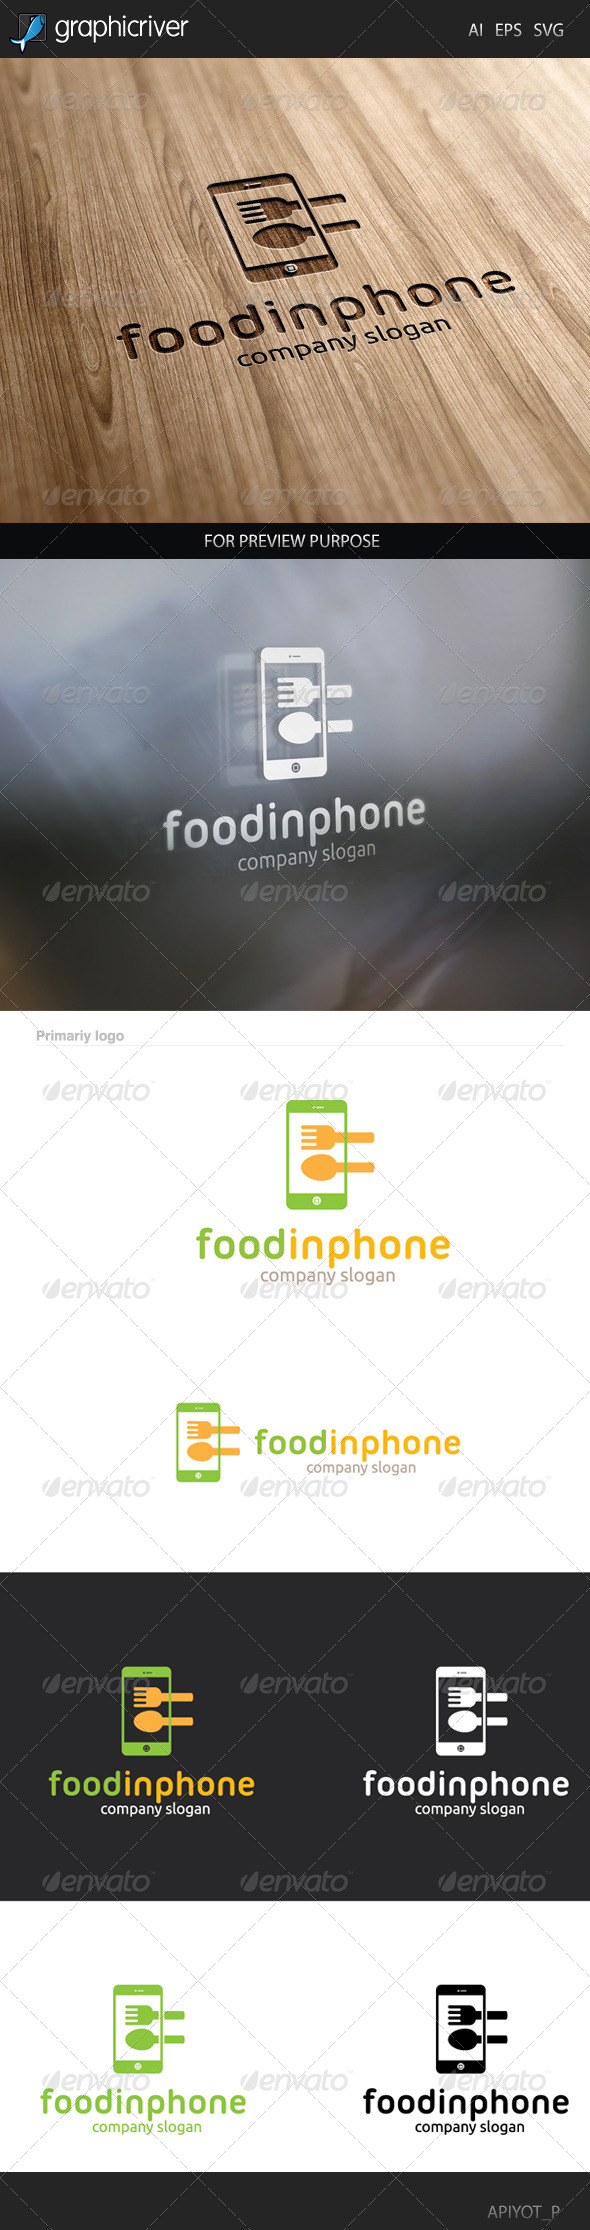 Food Inphone